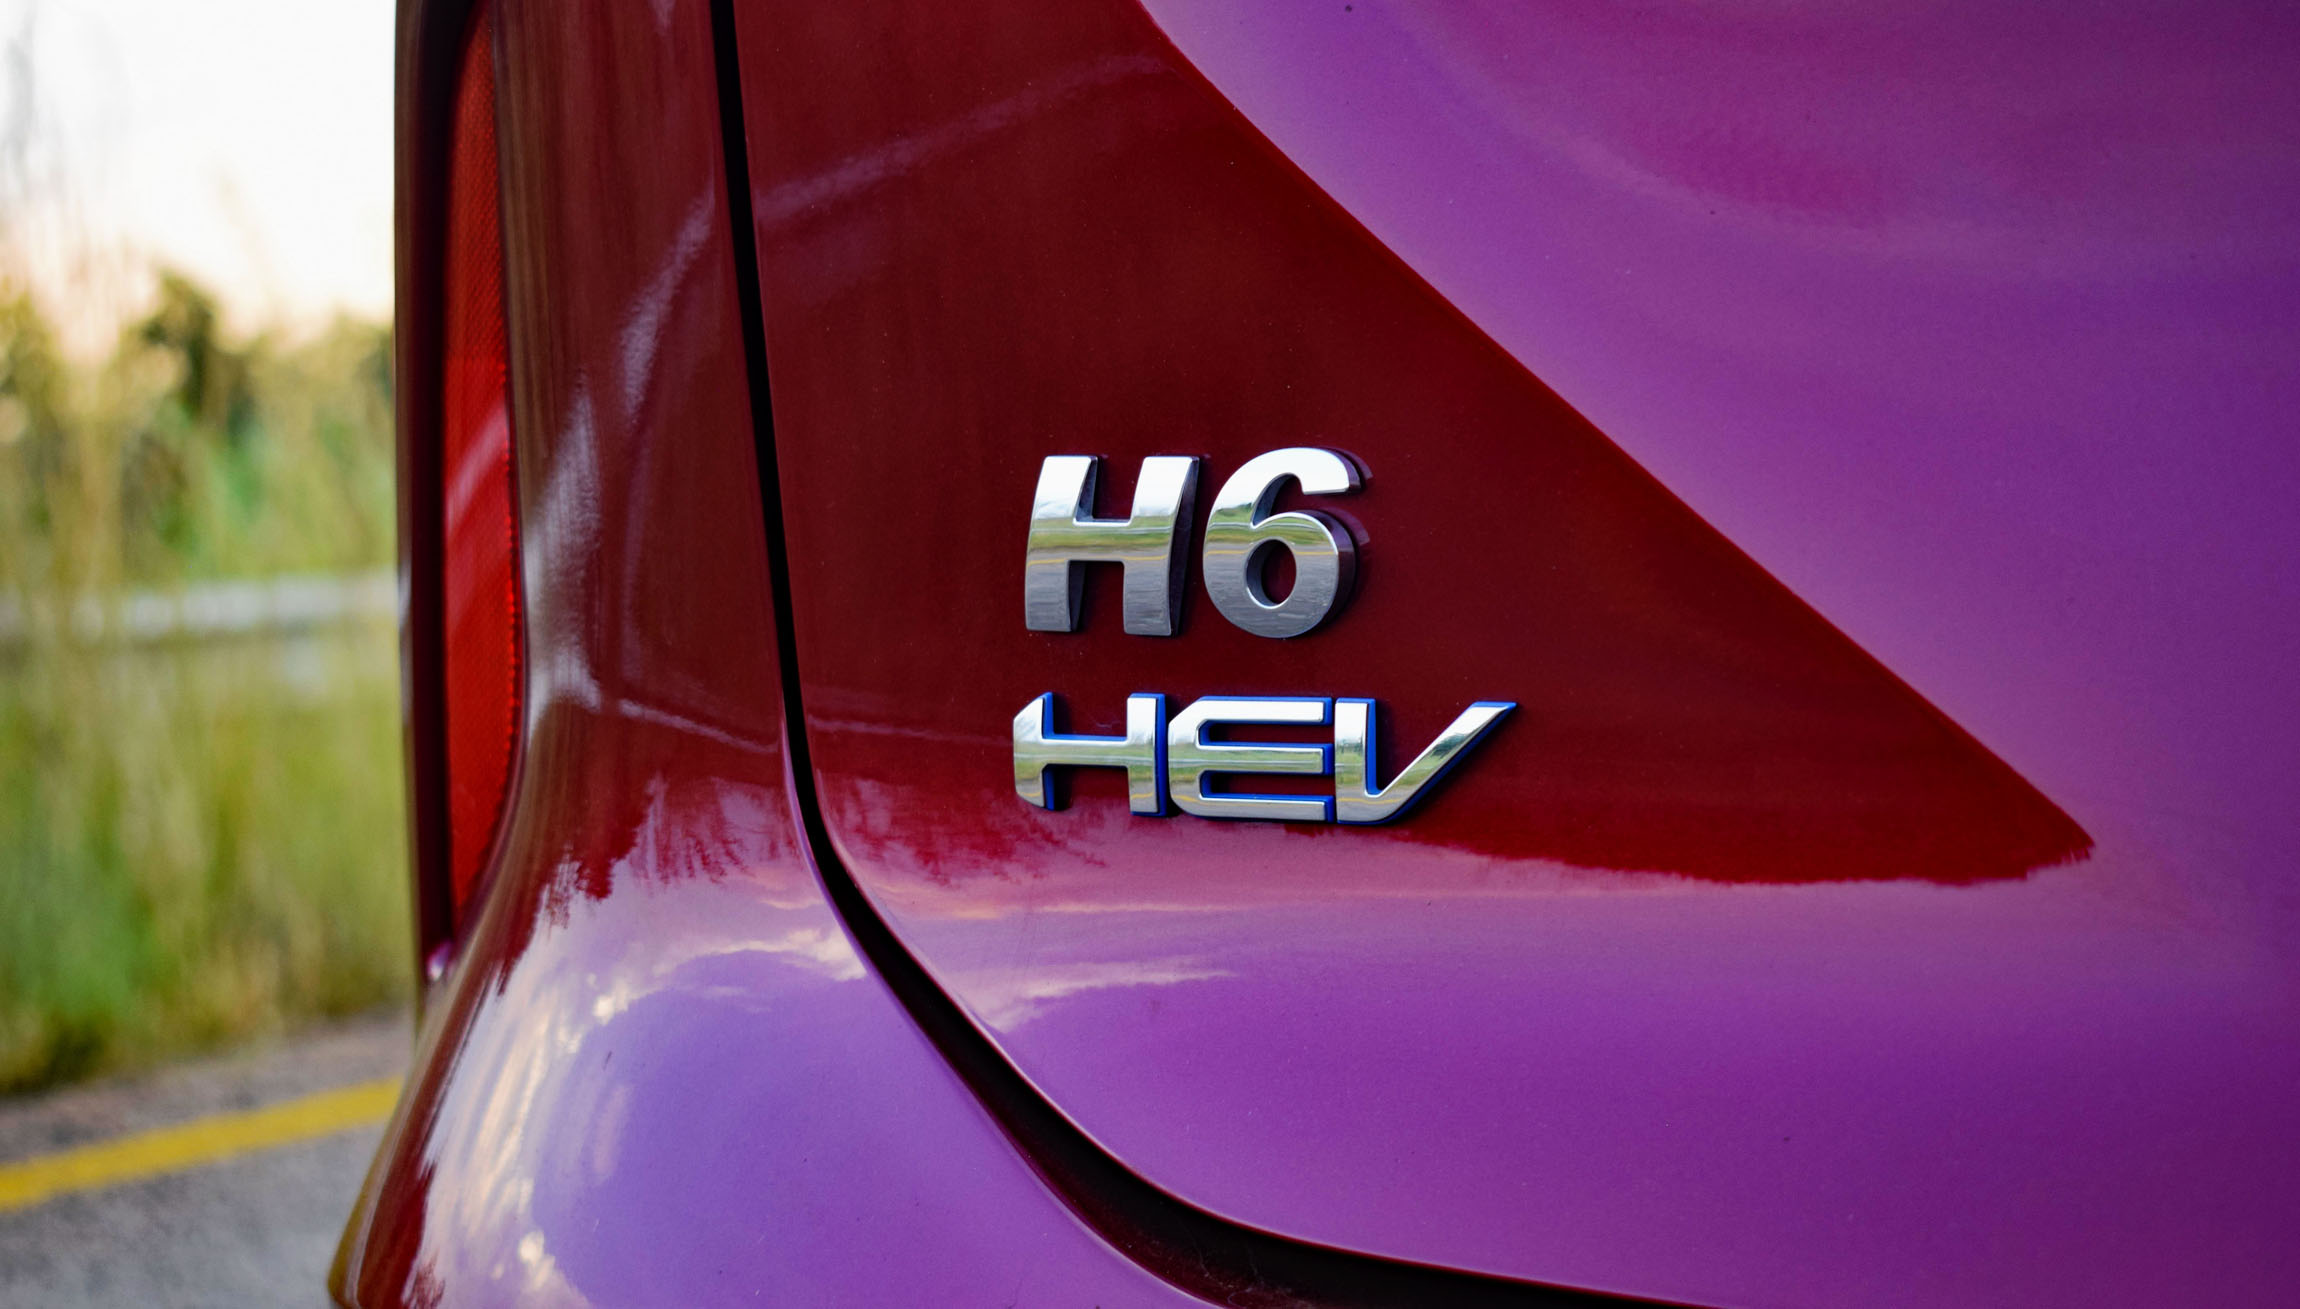 haval, haval h6 hev, haval h6 hybrid review – the best haval on the market